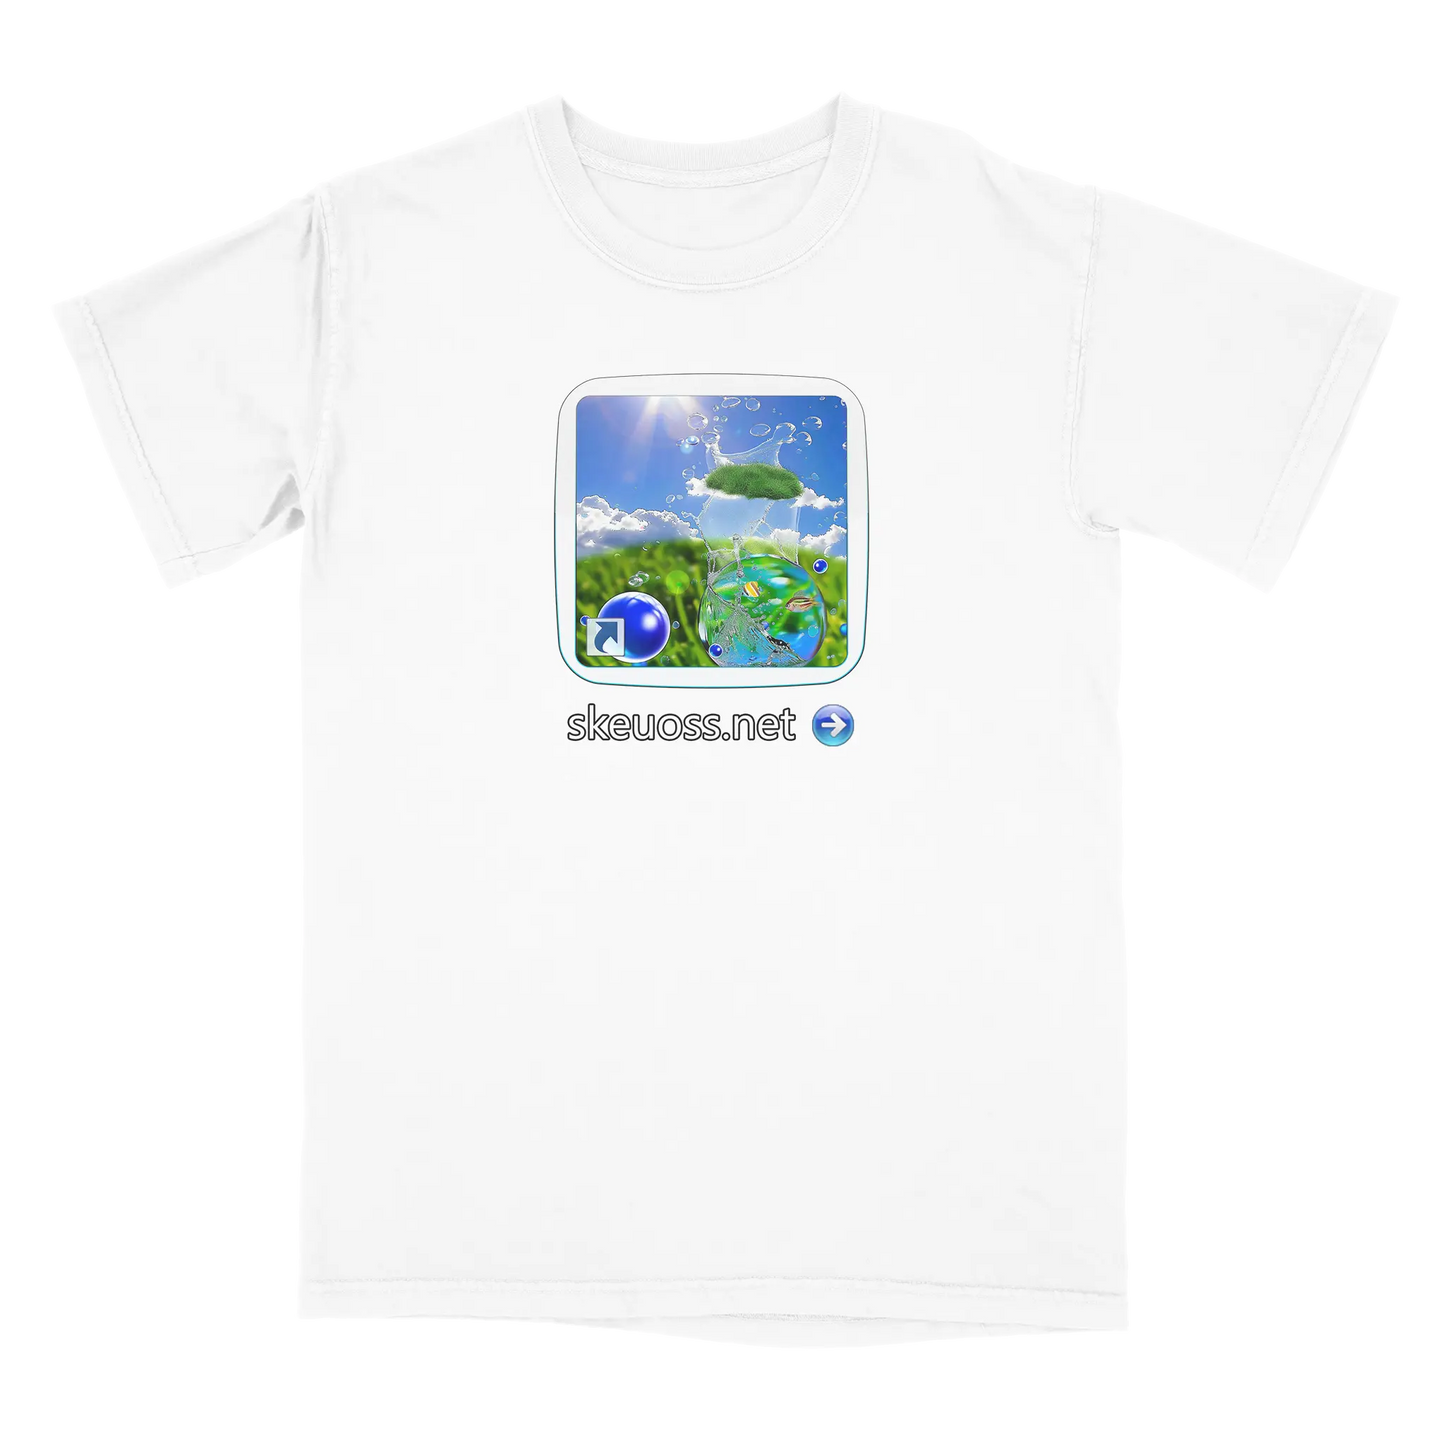 Frutiger Aero T-shirt - User Login Collection - User 275